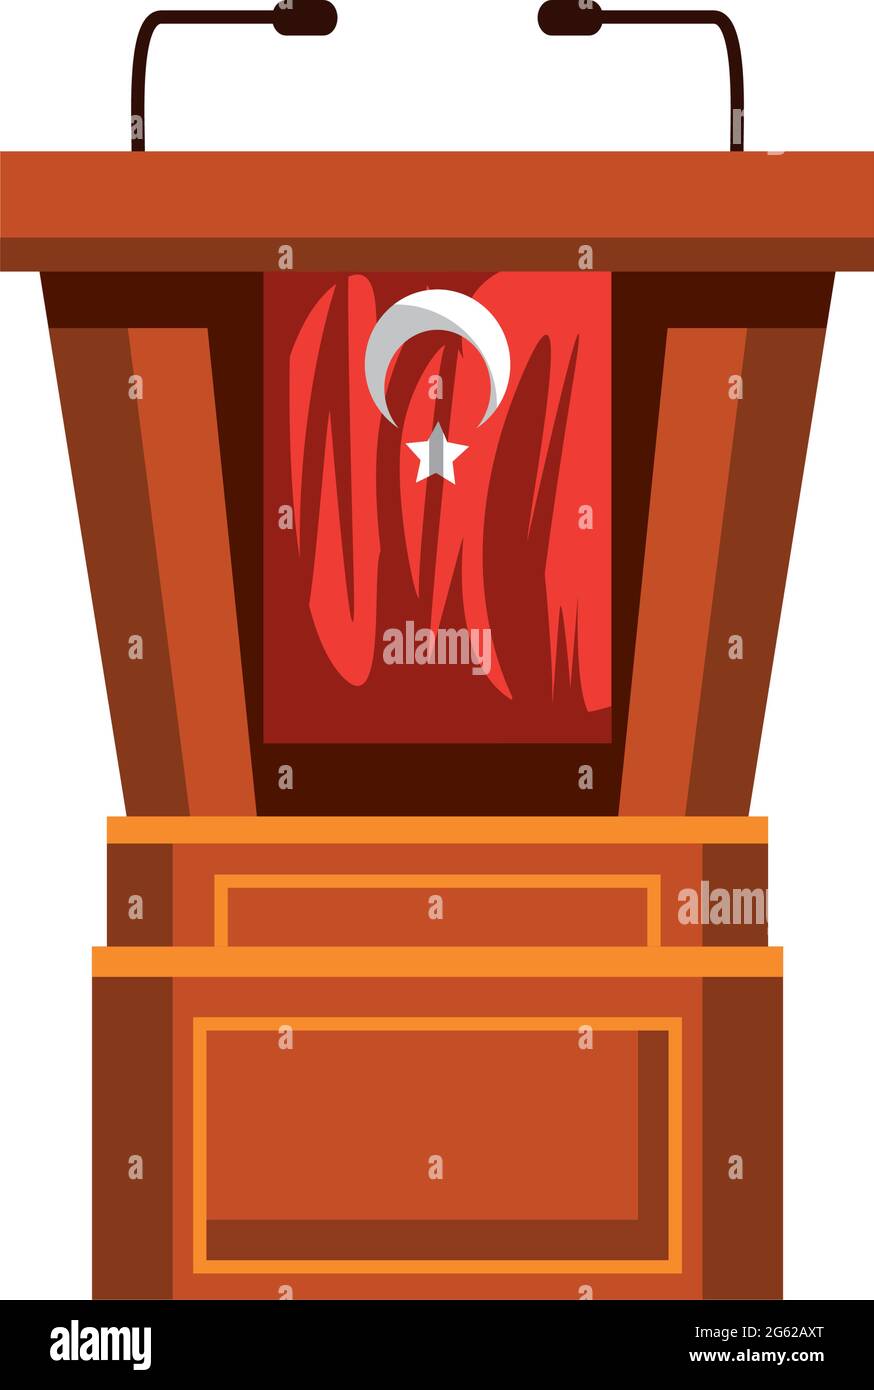 turkey flag in podium Stock Vector